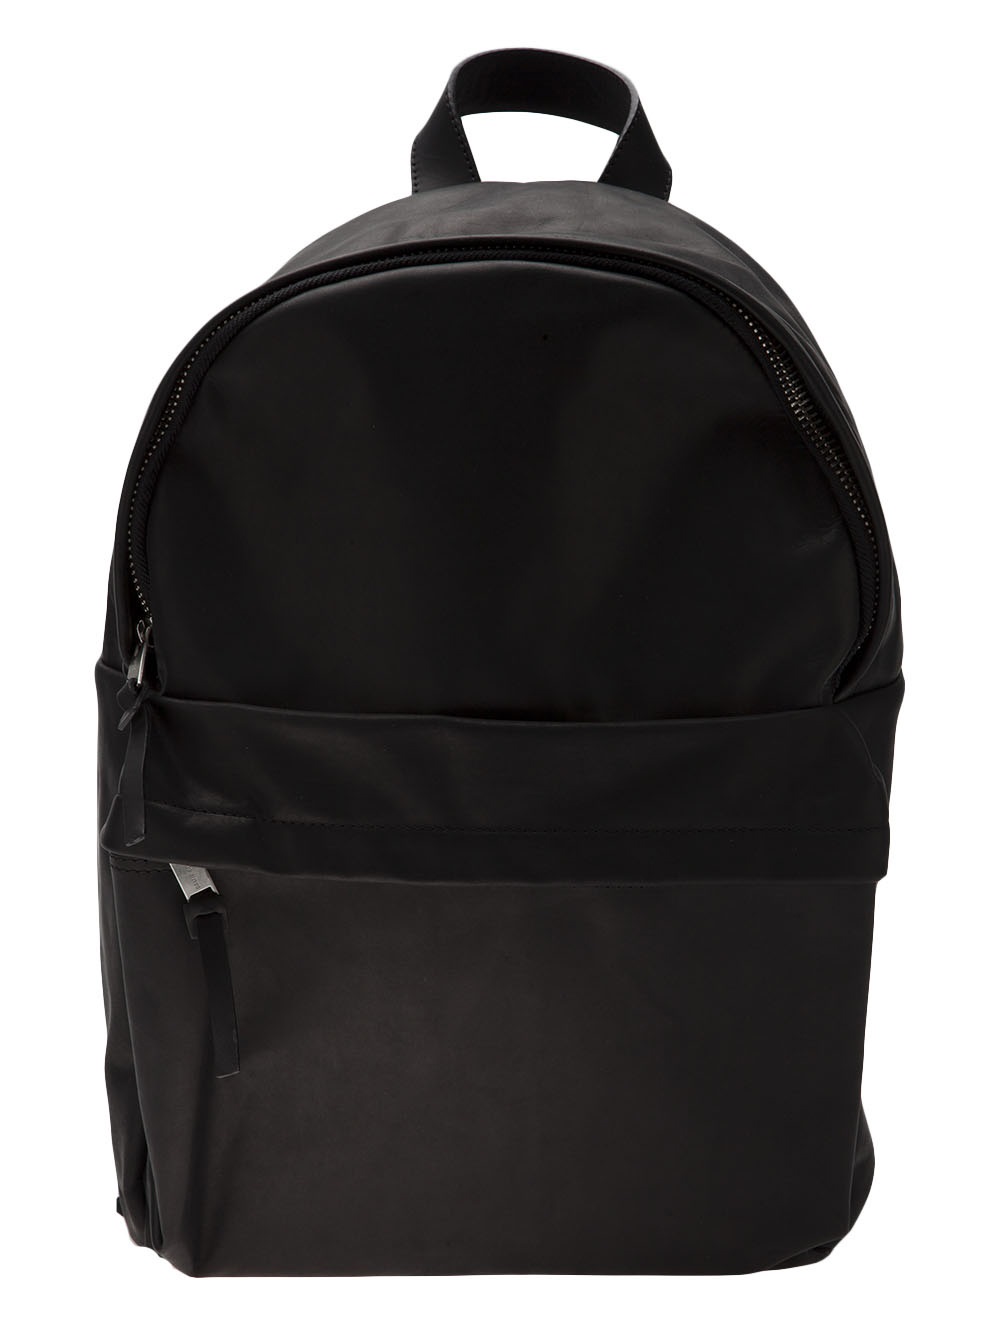 Lyst - Silent - Damir Doma Leather Backpack in Black for Men